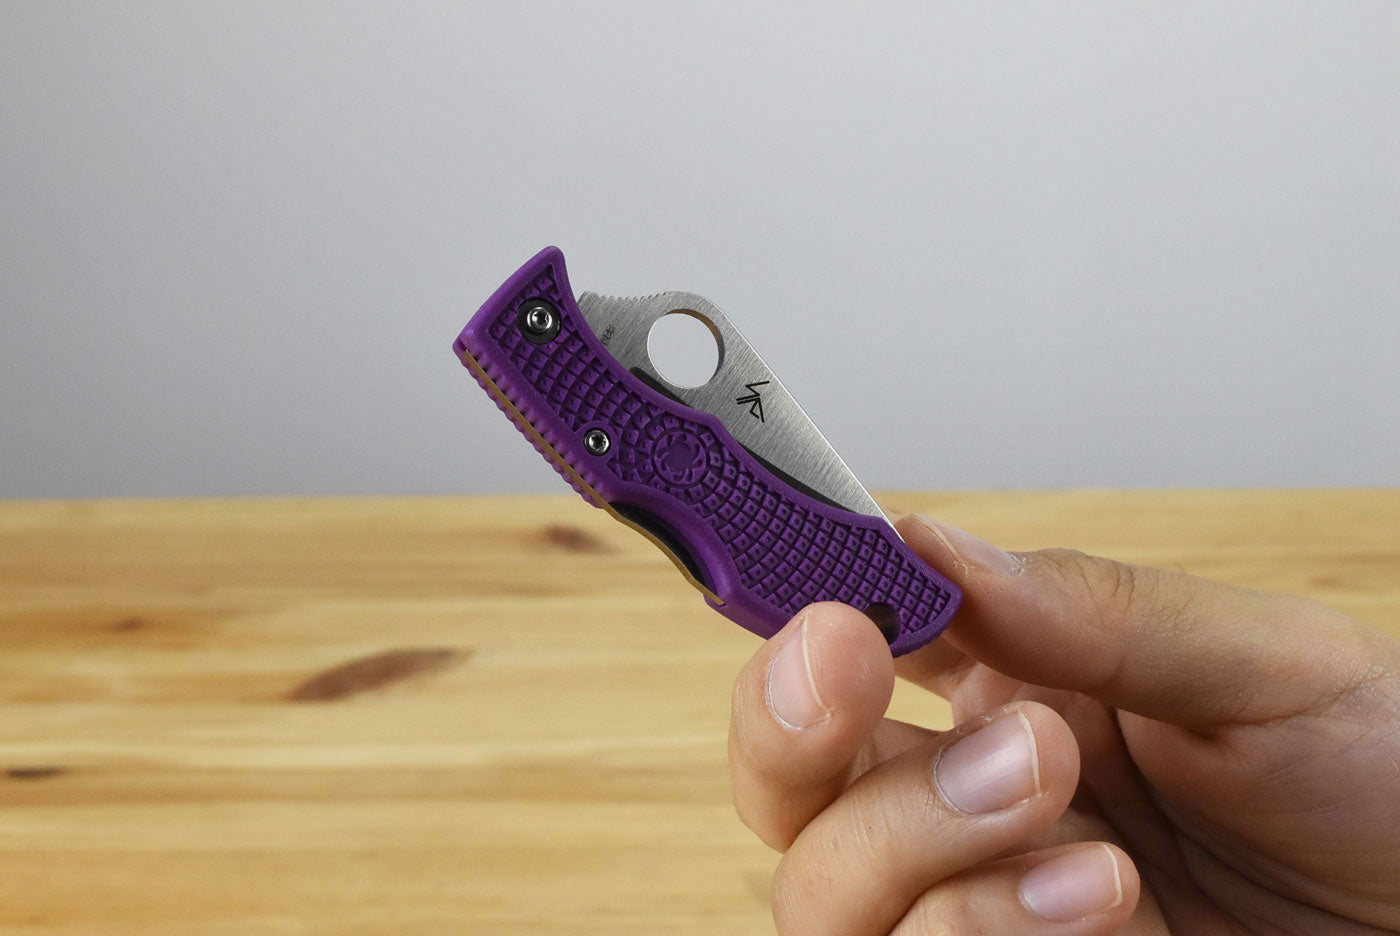 Spyderco Ladybug 3 Lightweight Purple Knife